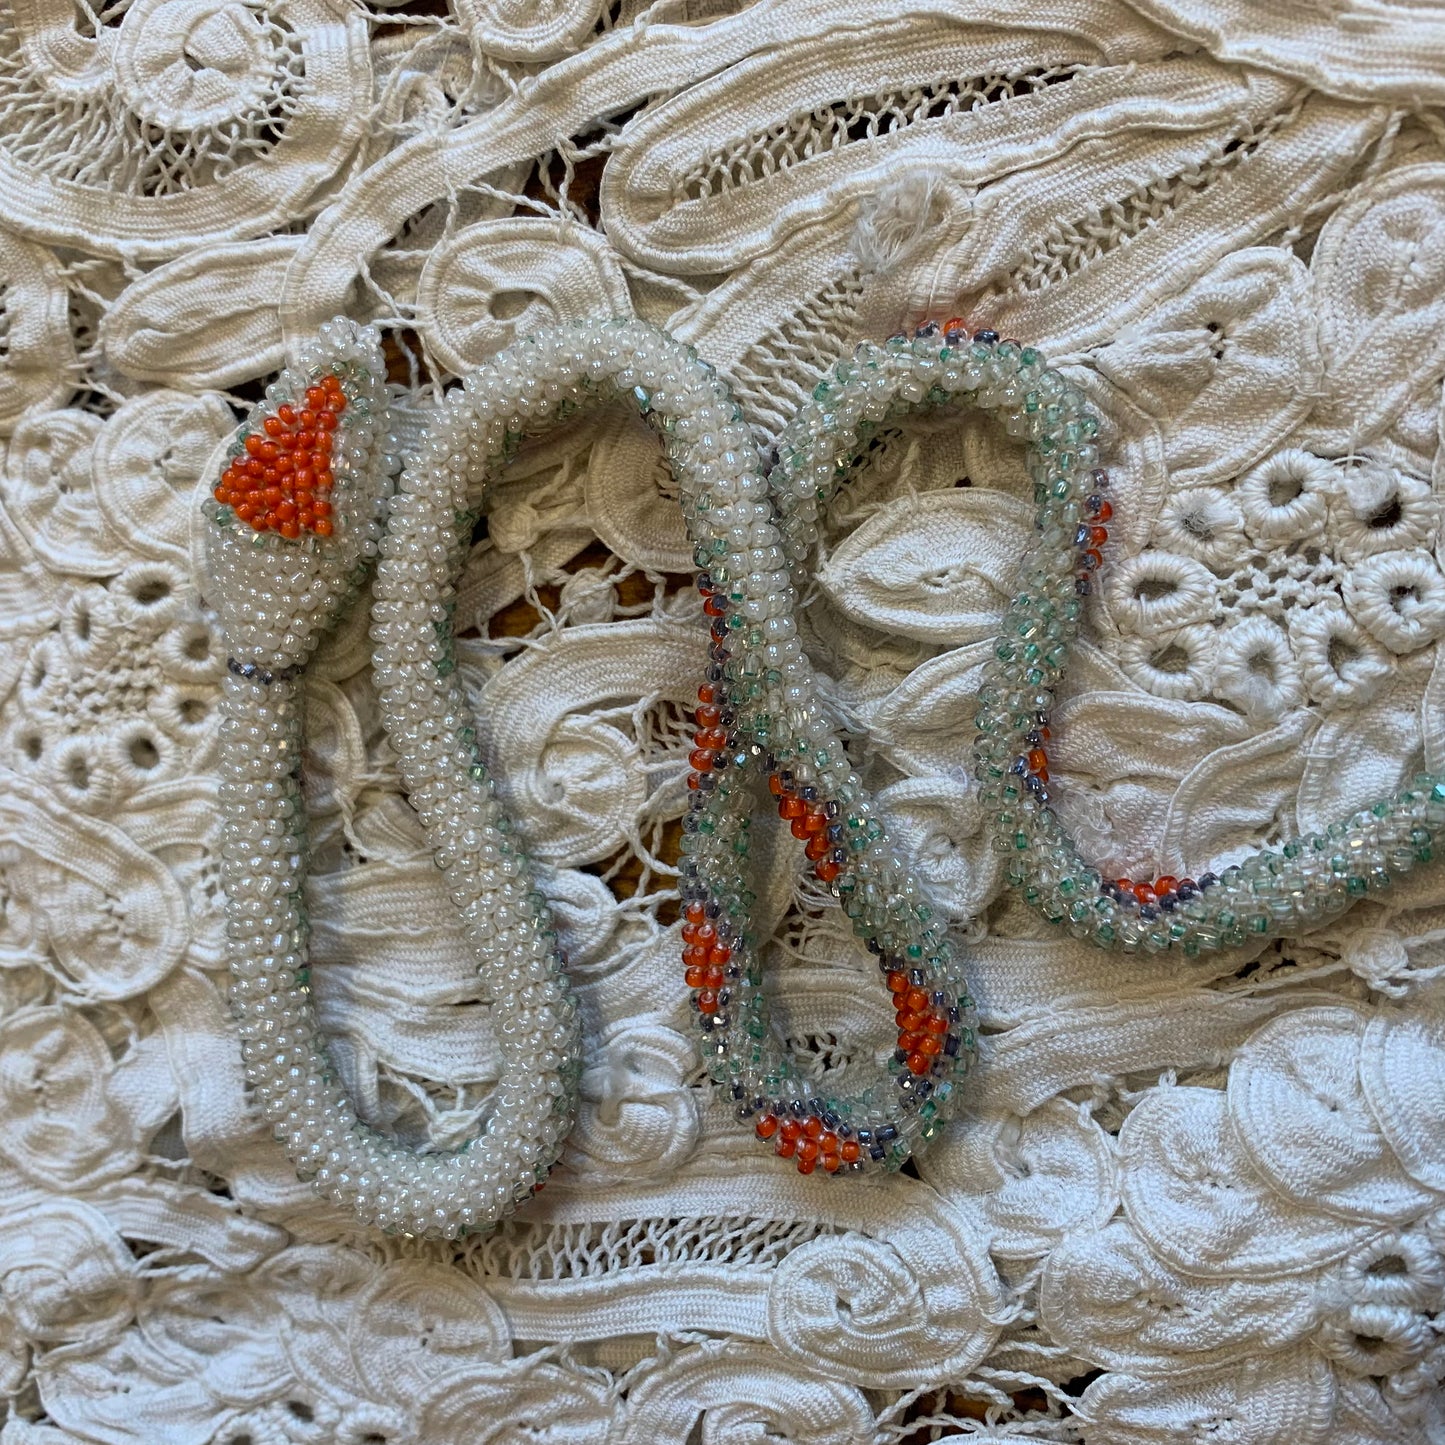 Bead Crochet Snake | Seafoam Diamond